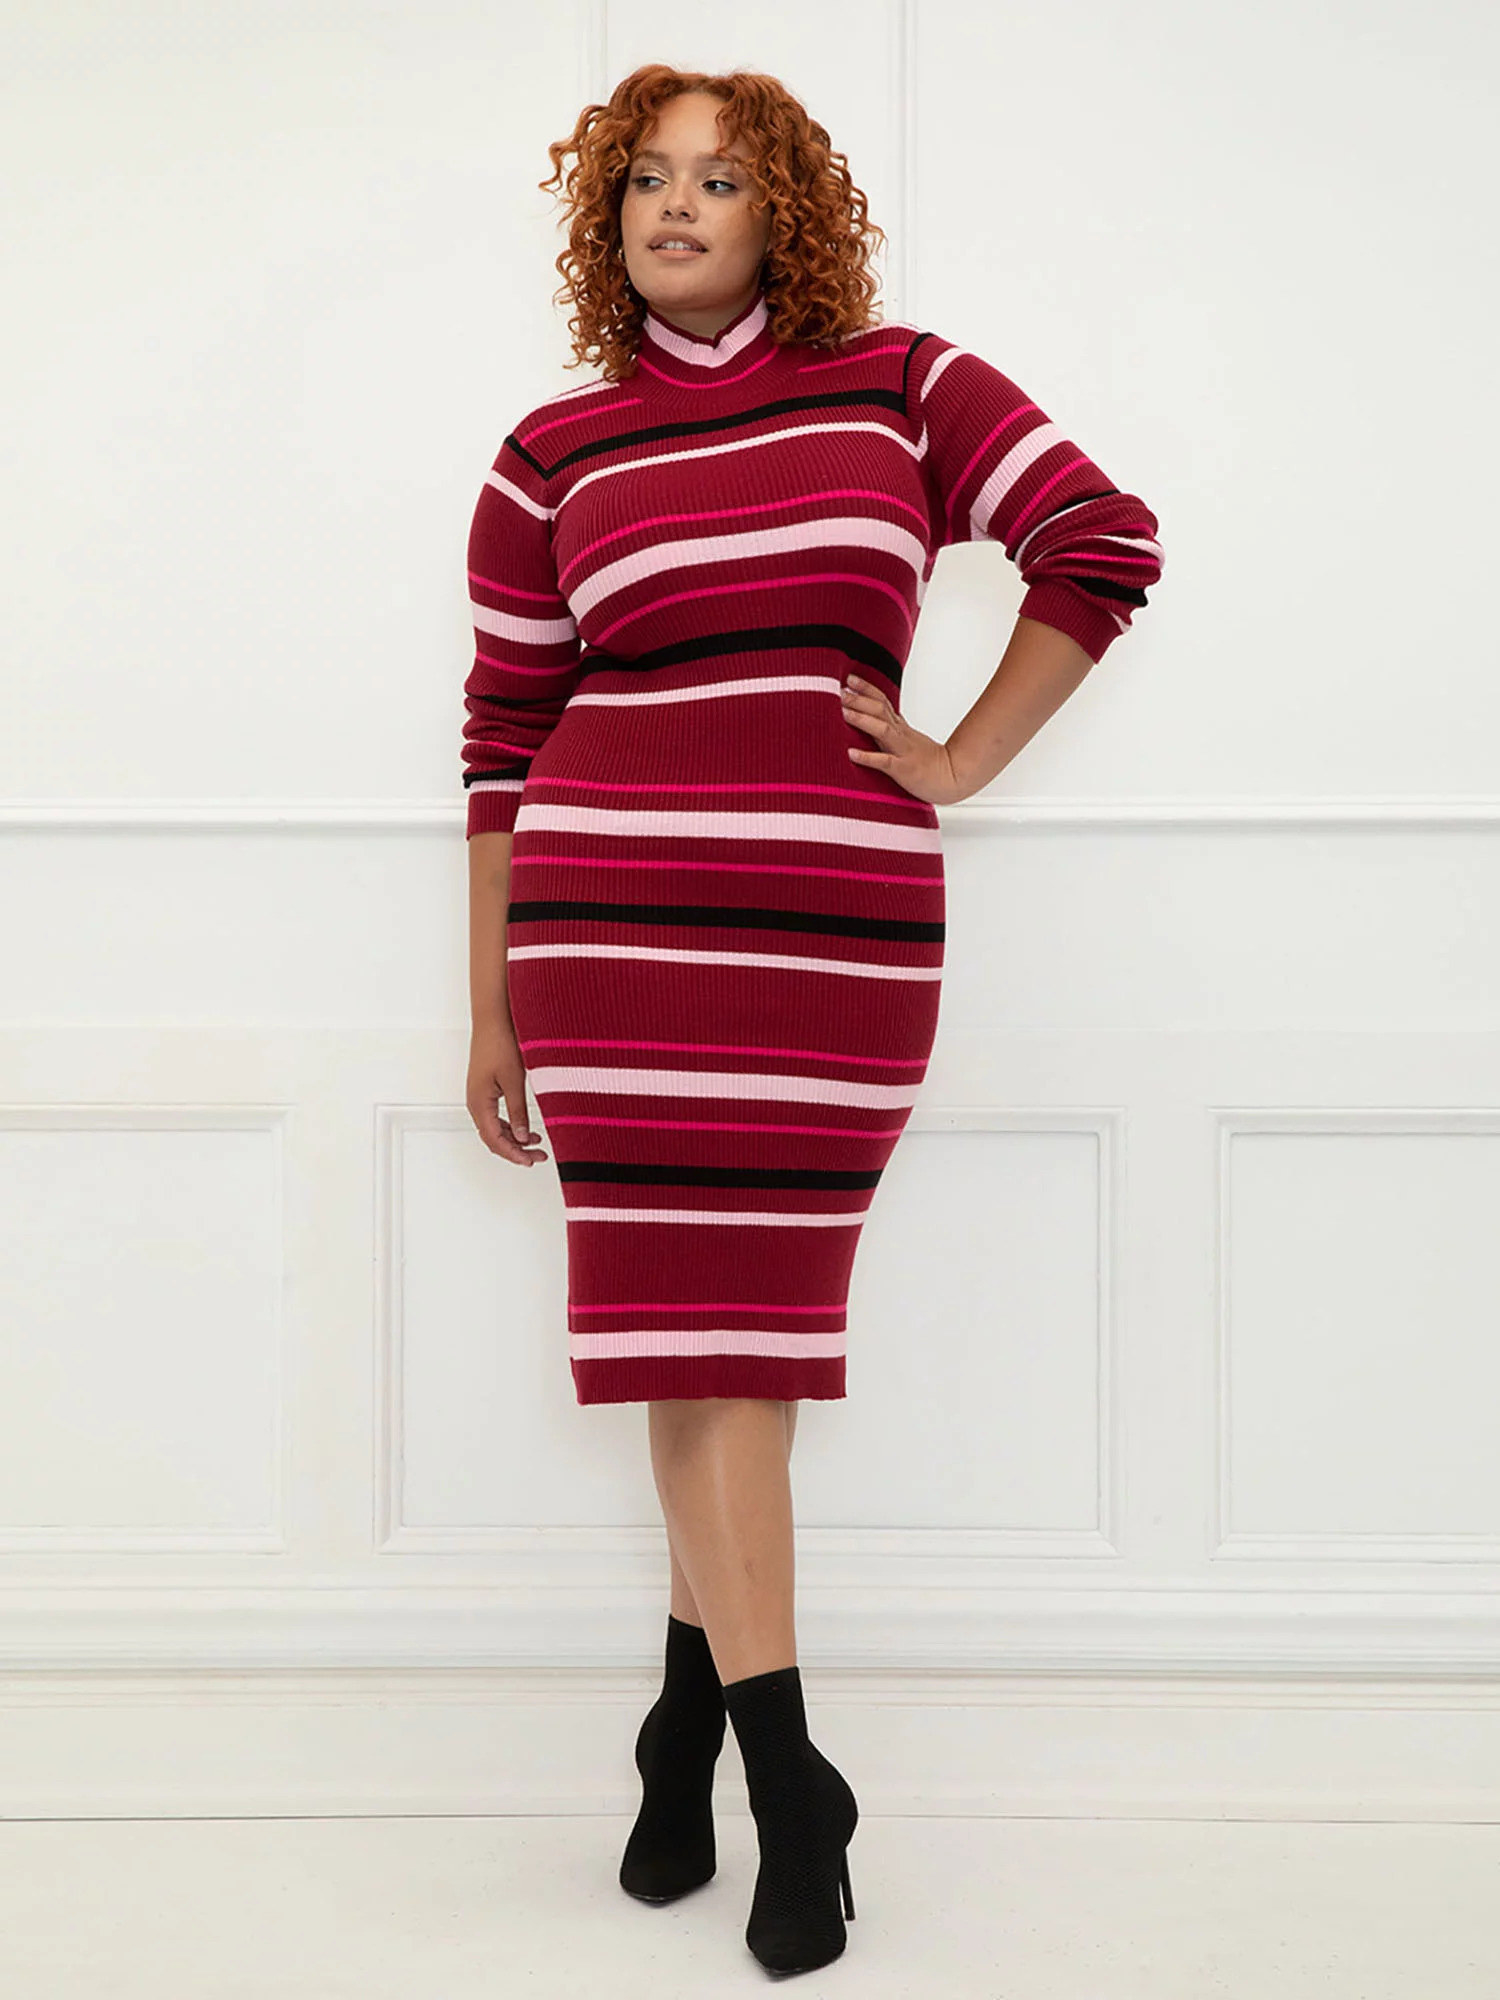 Model wearing the striped burgundy dress